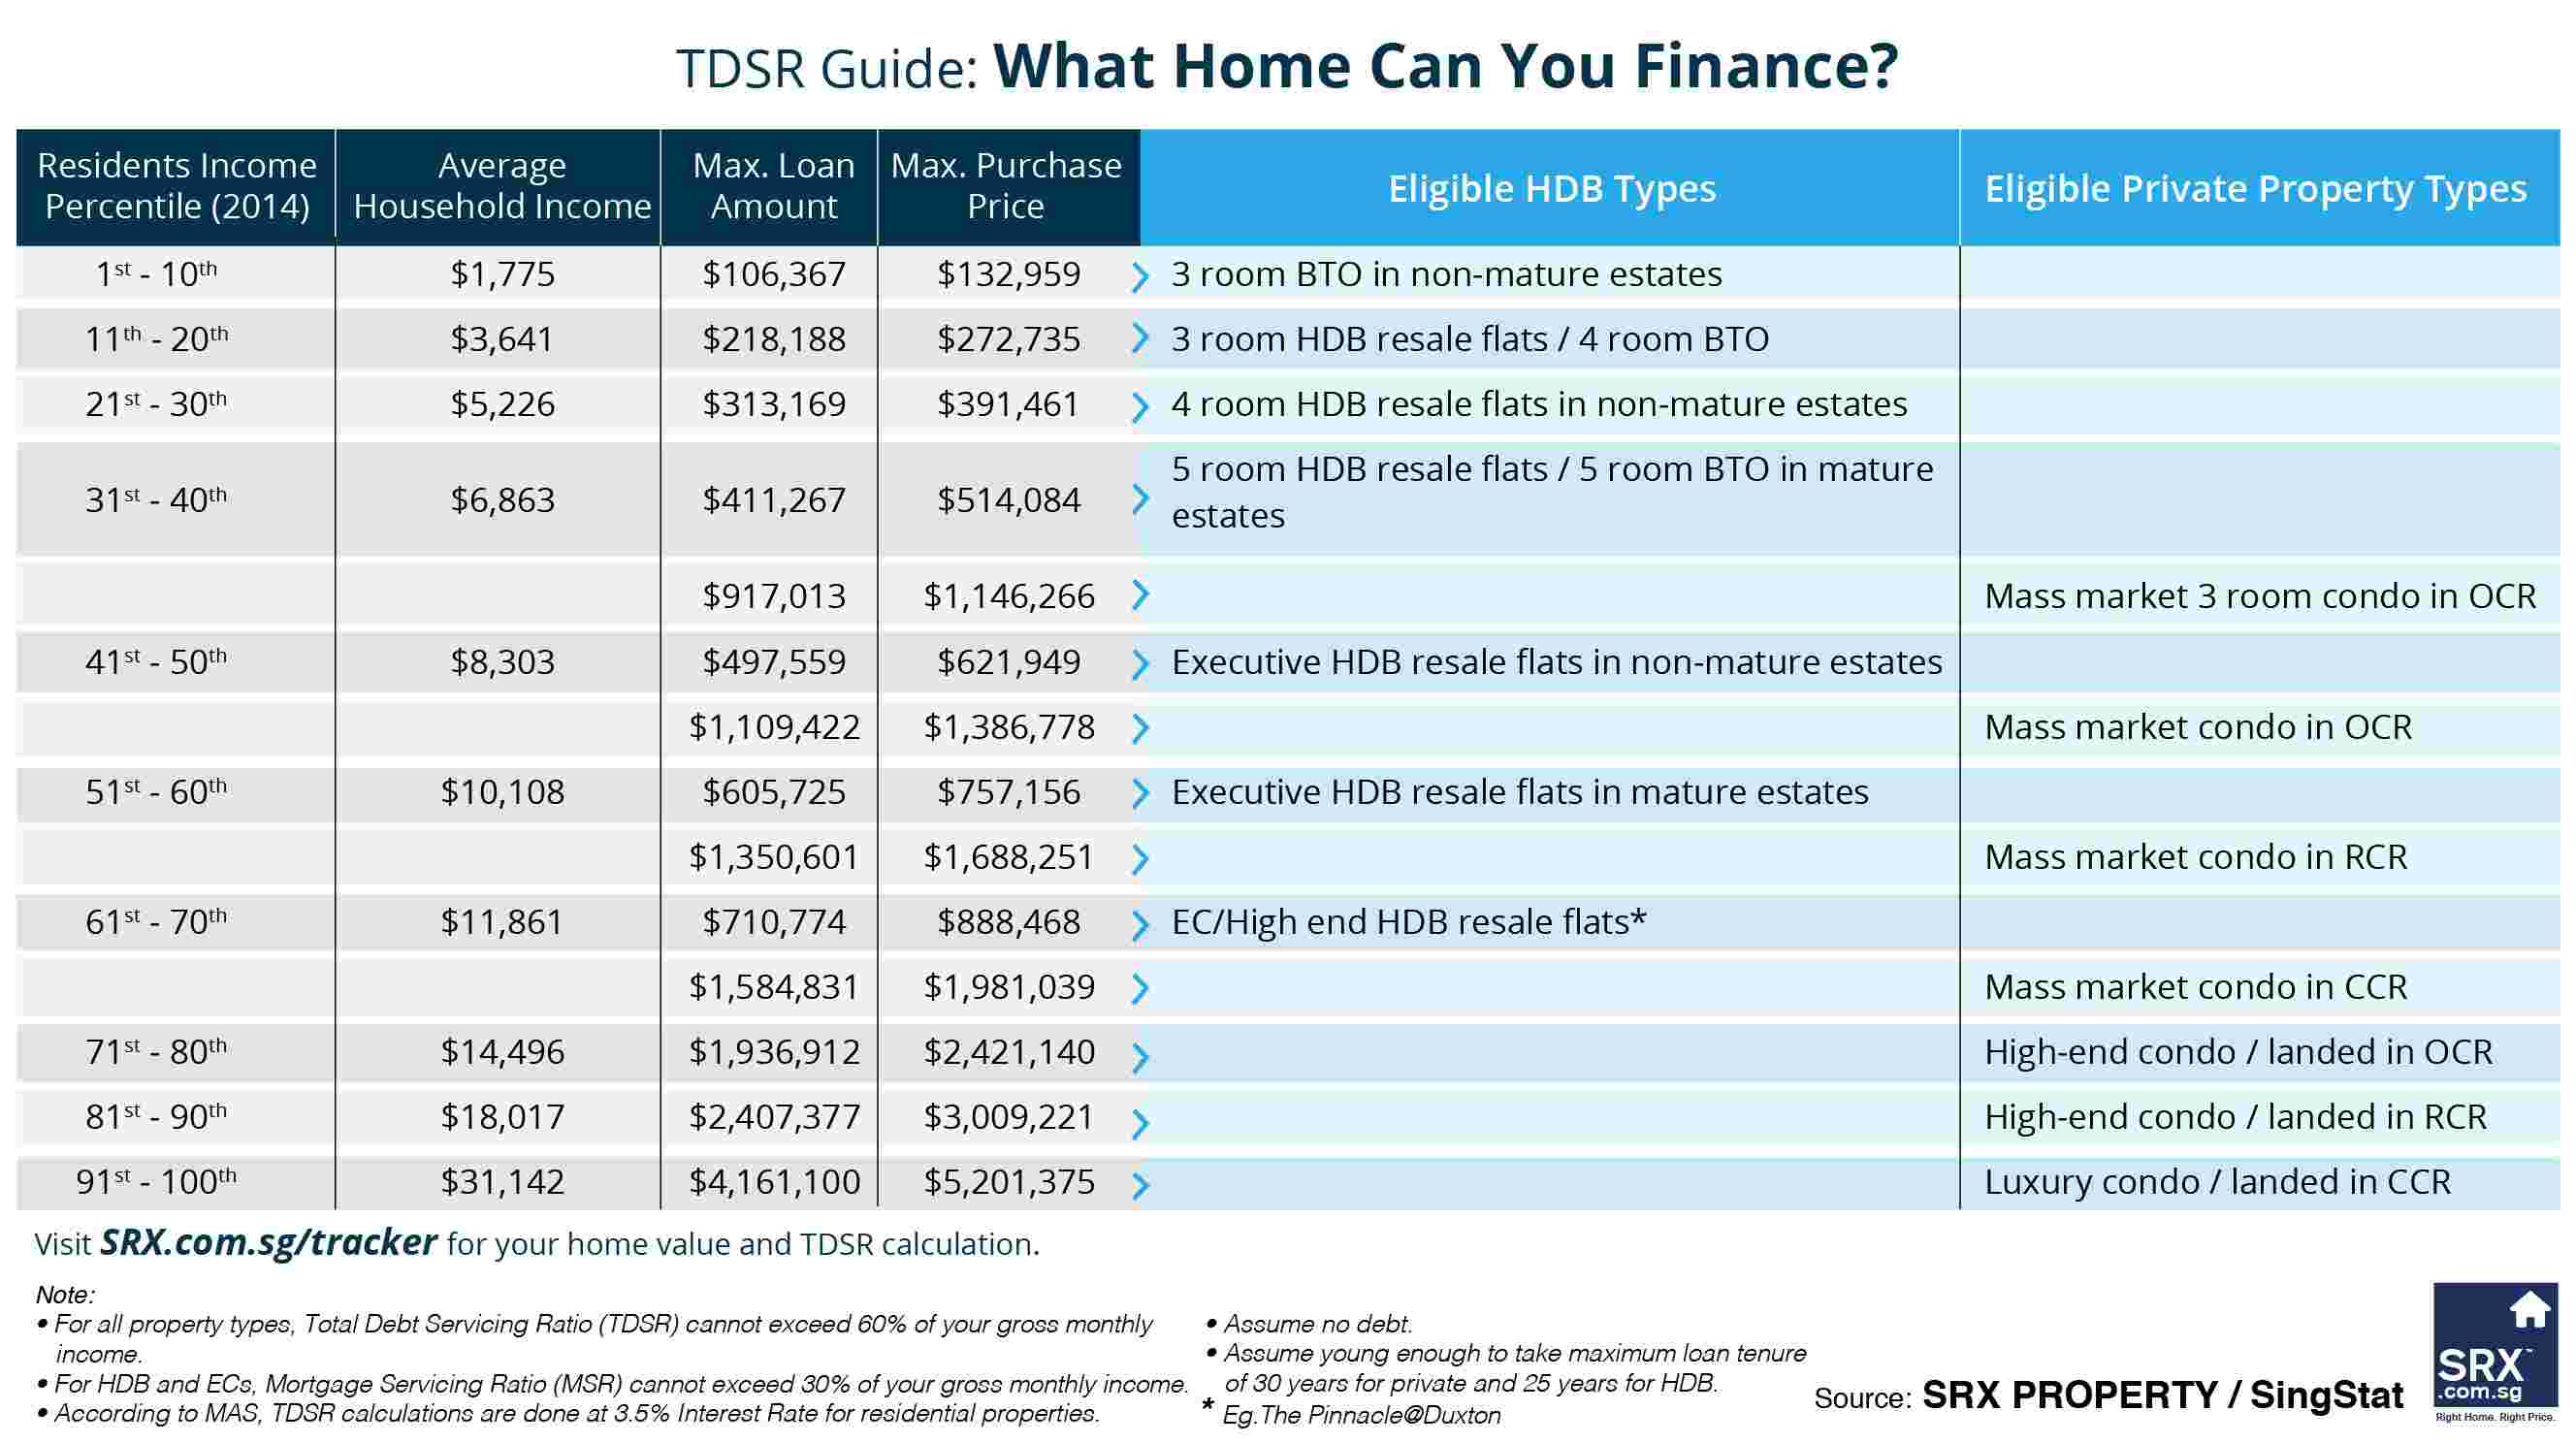 Total Debt Servicing Ratio (TDSR) Guide by SRX